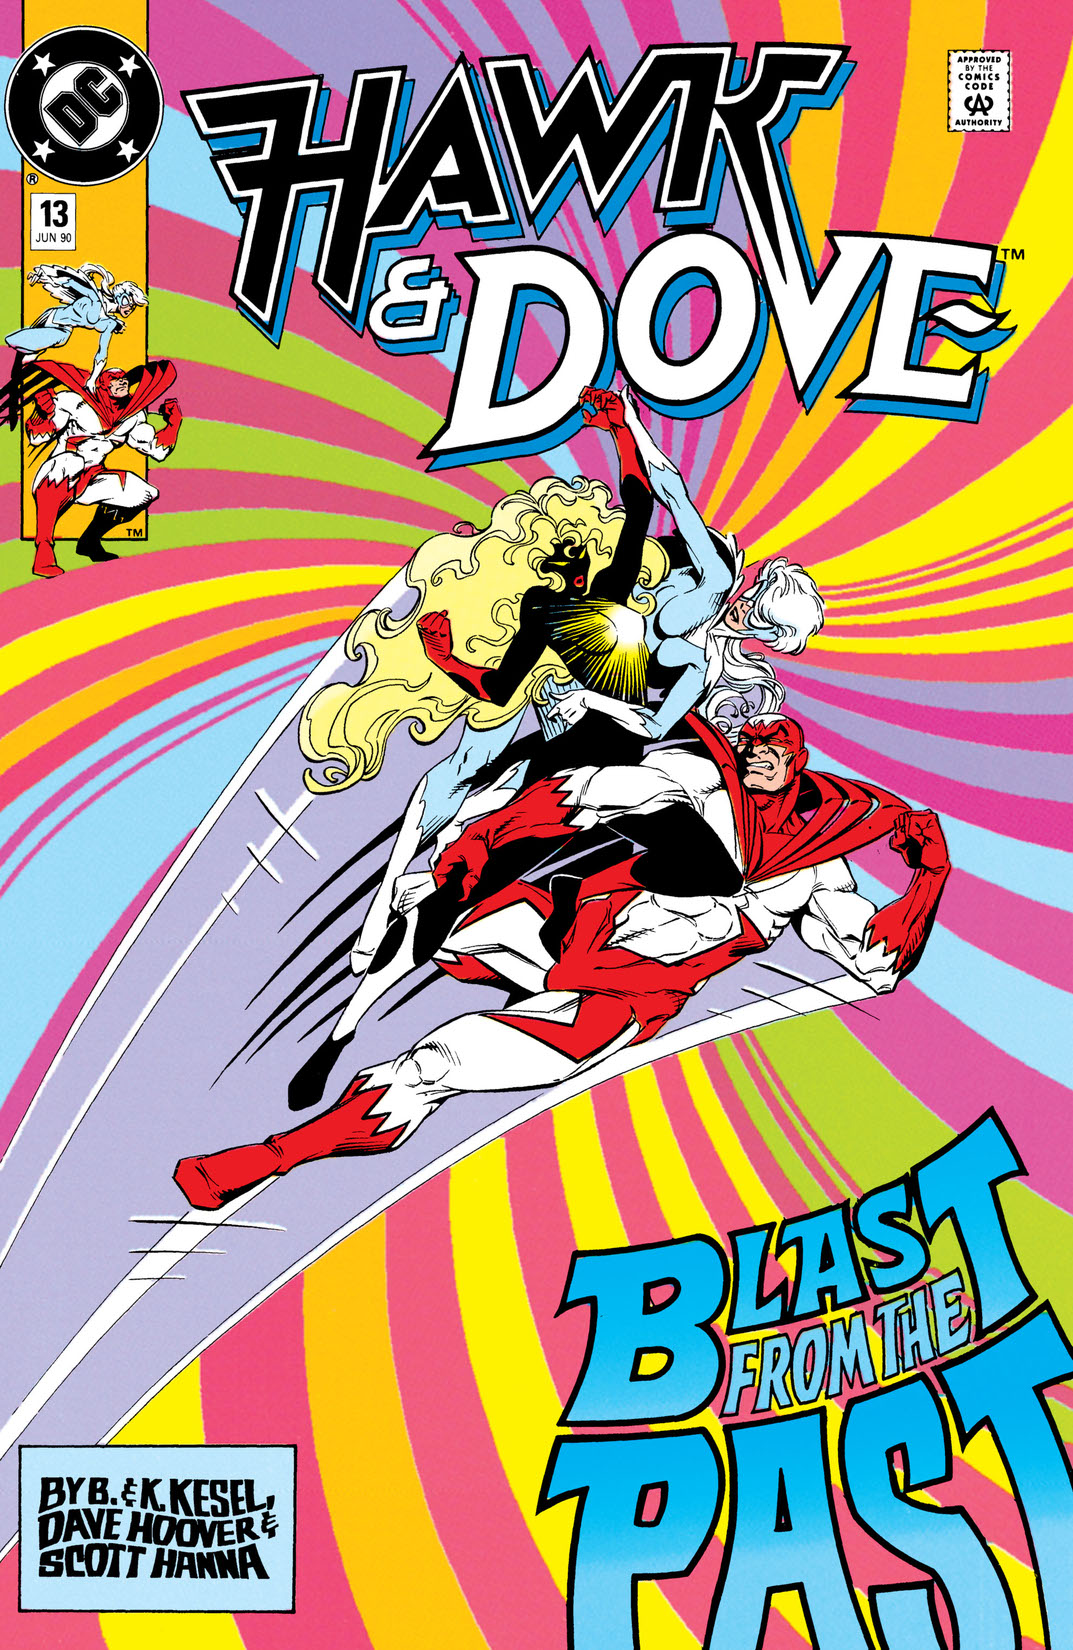 Hawk & Dove (1989-) #13 preview images